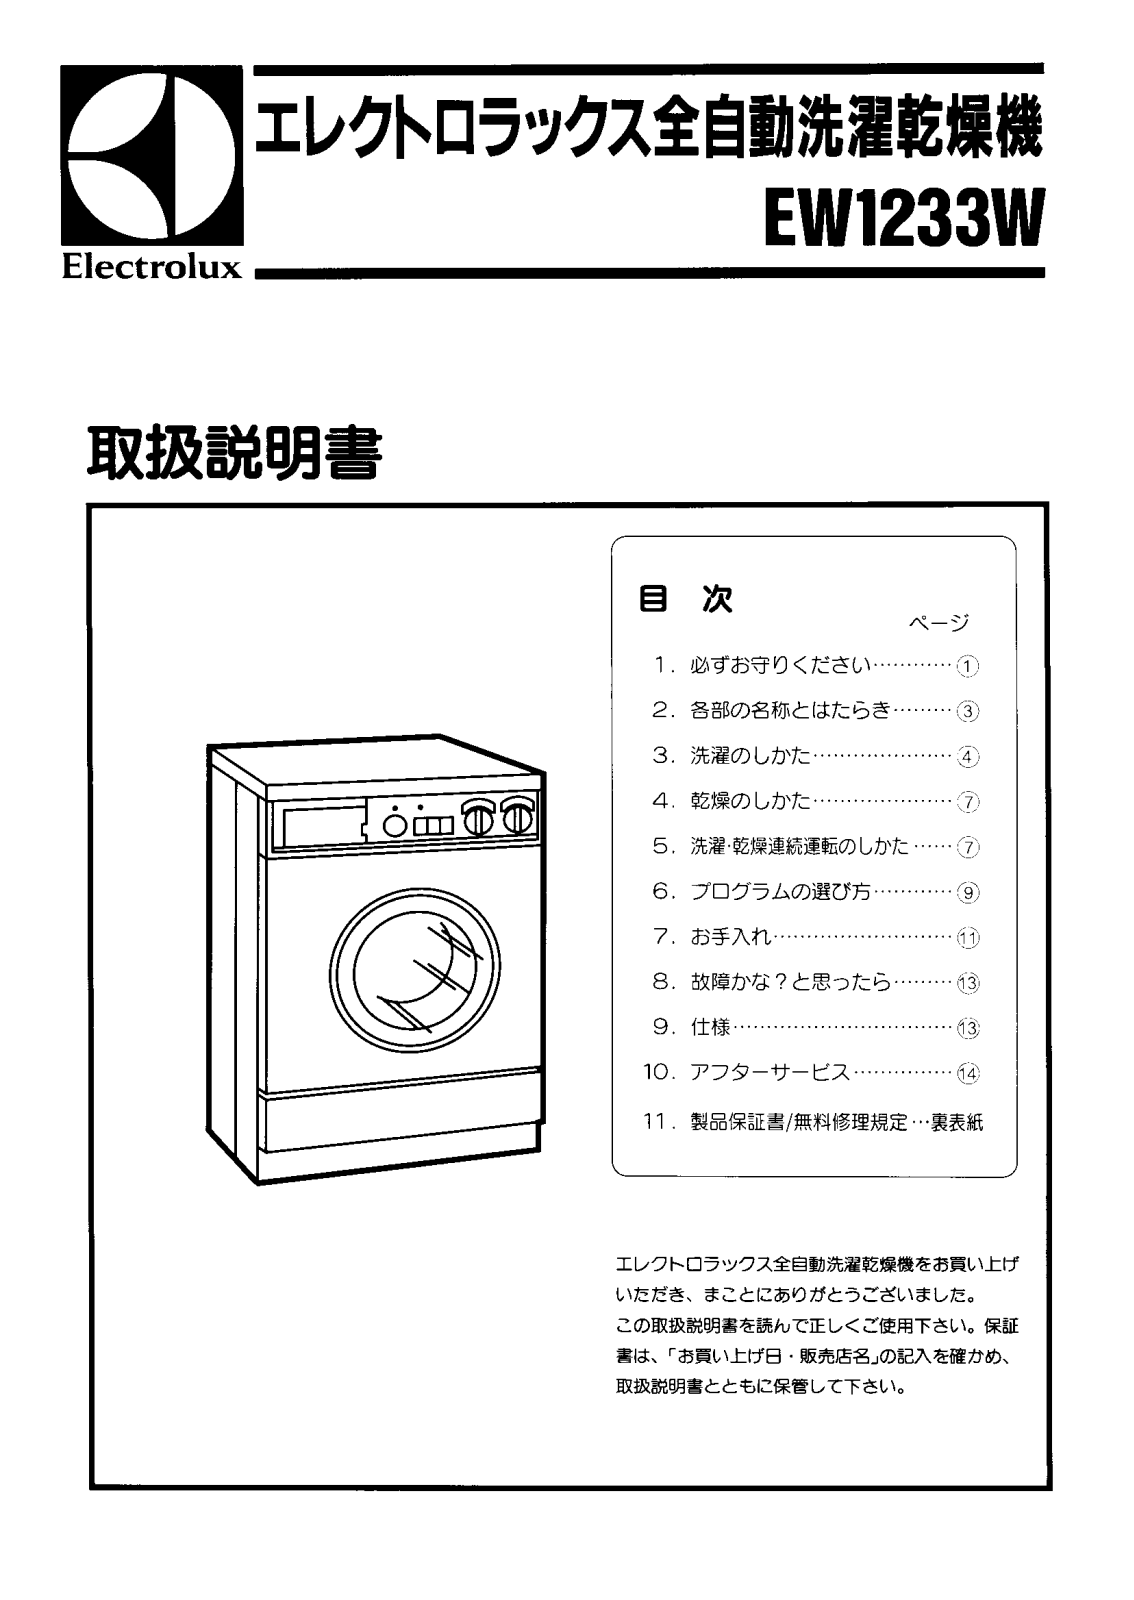 Electrolux EW1233W User Manual